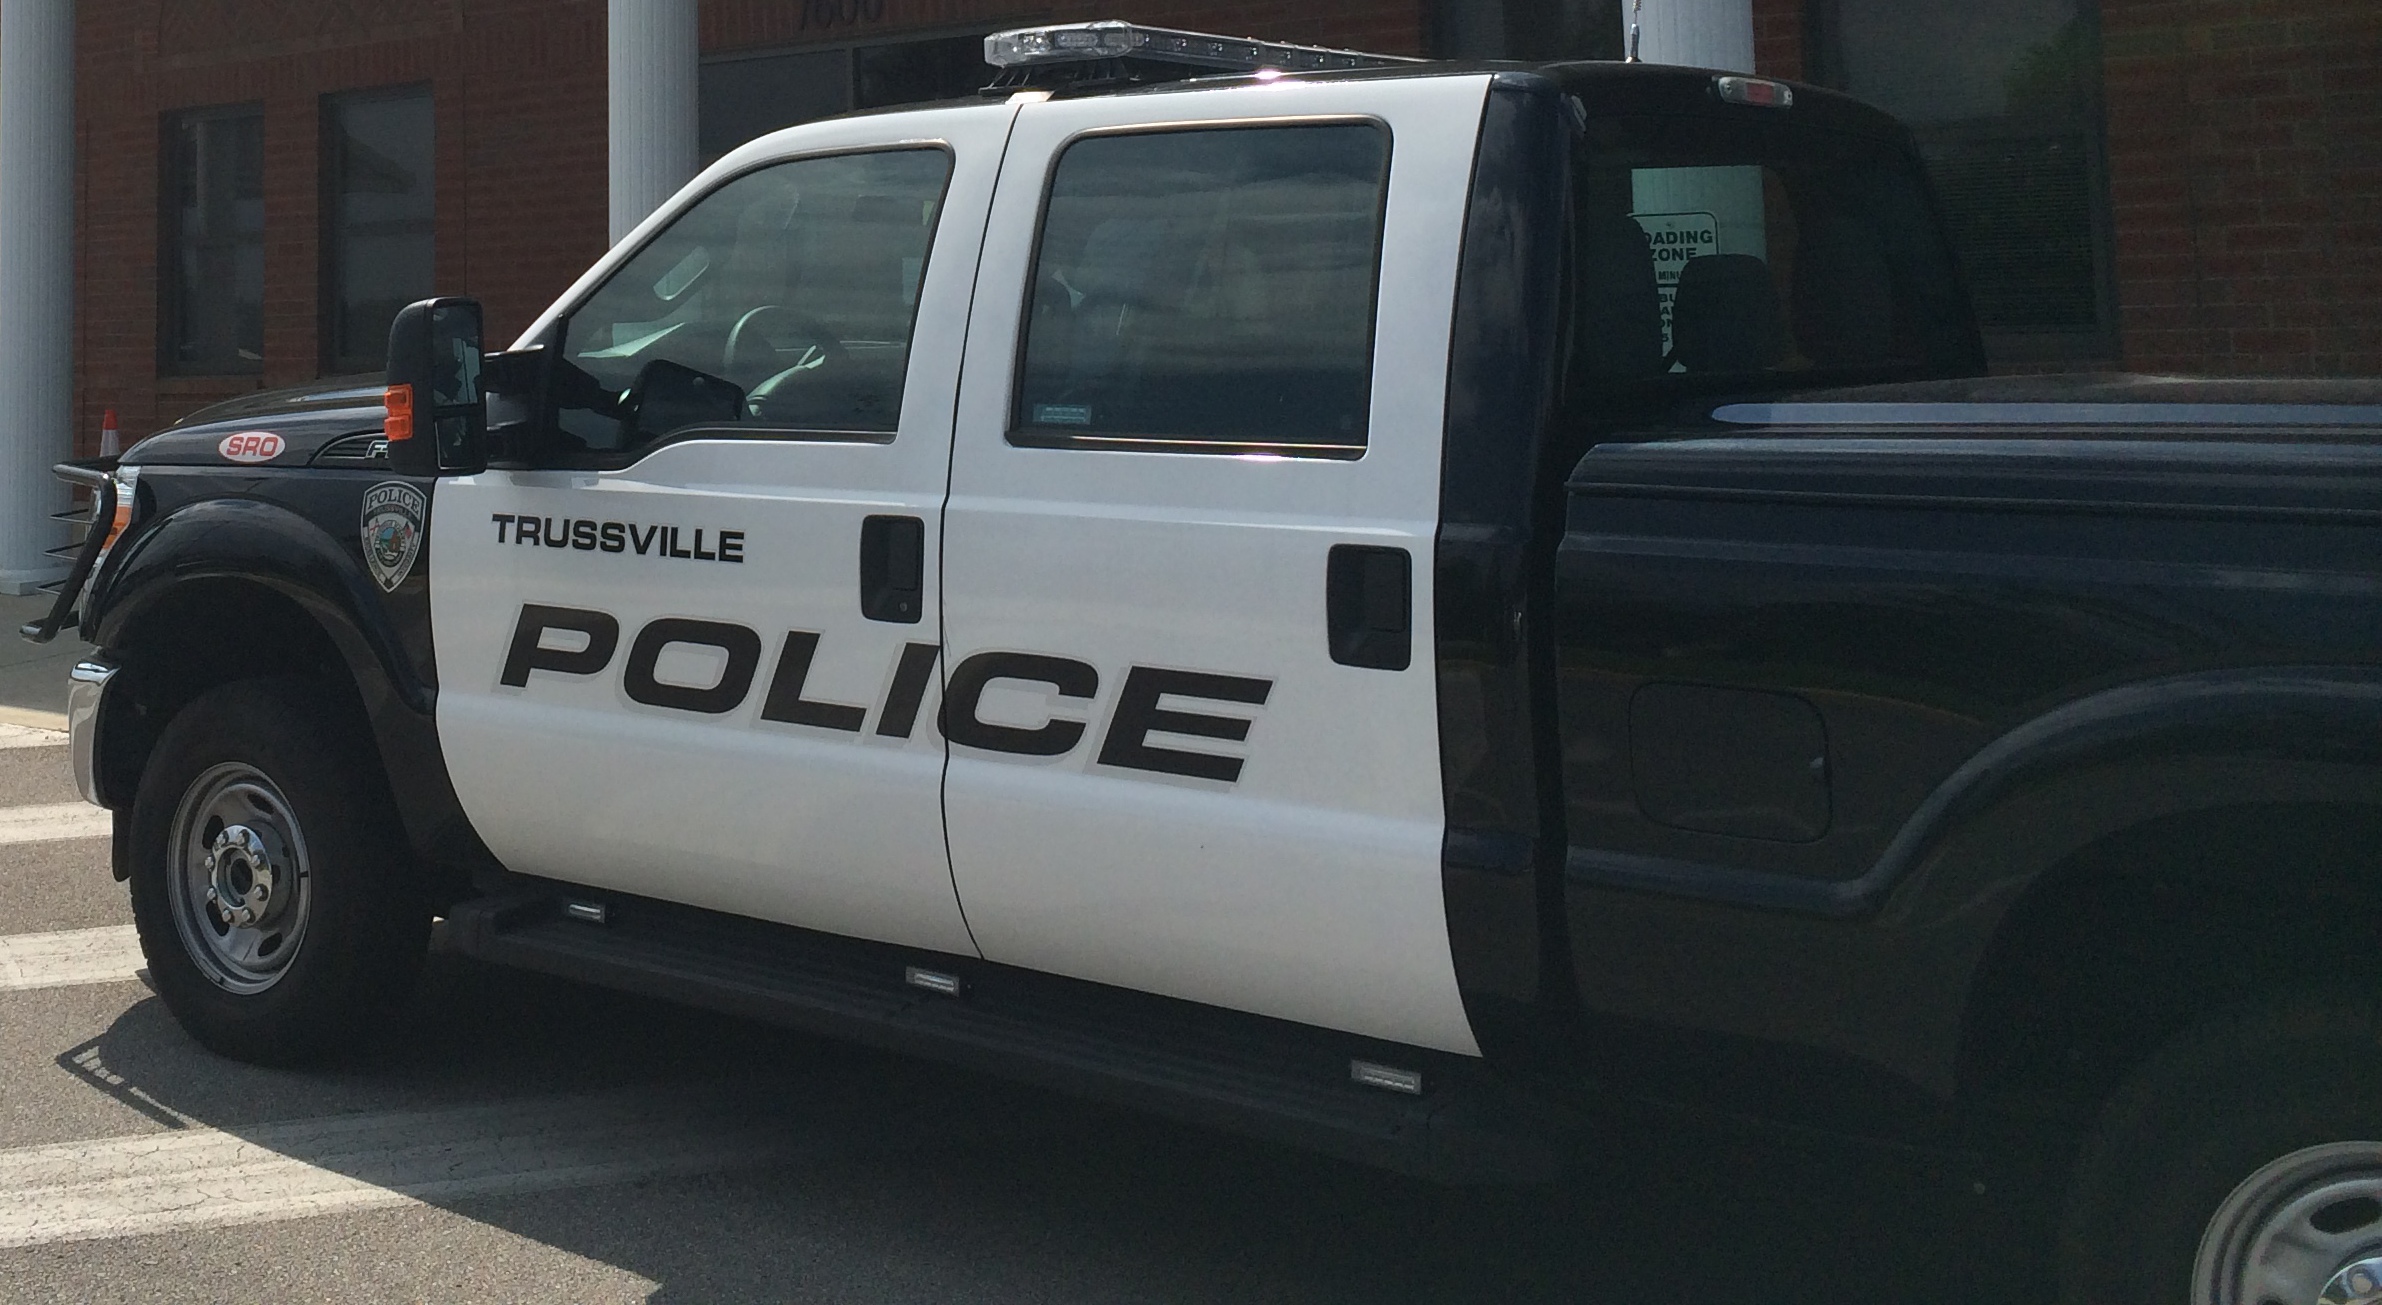 Trussville police equipment vandalized